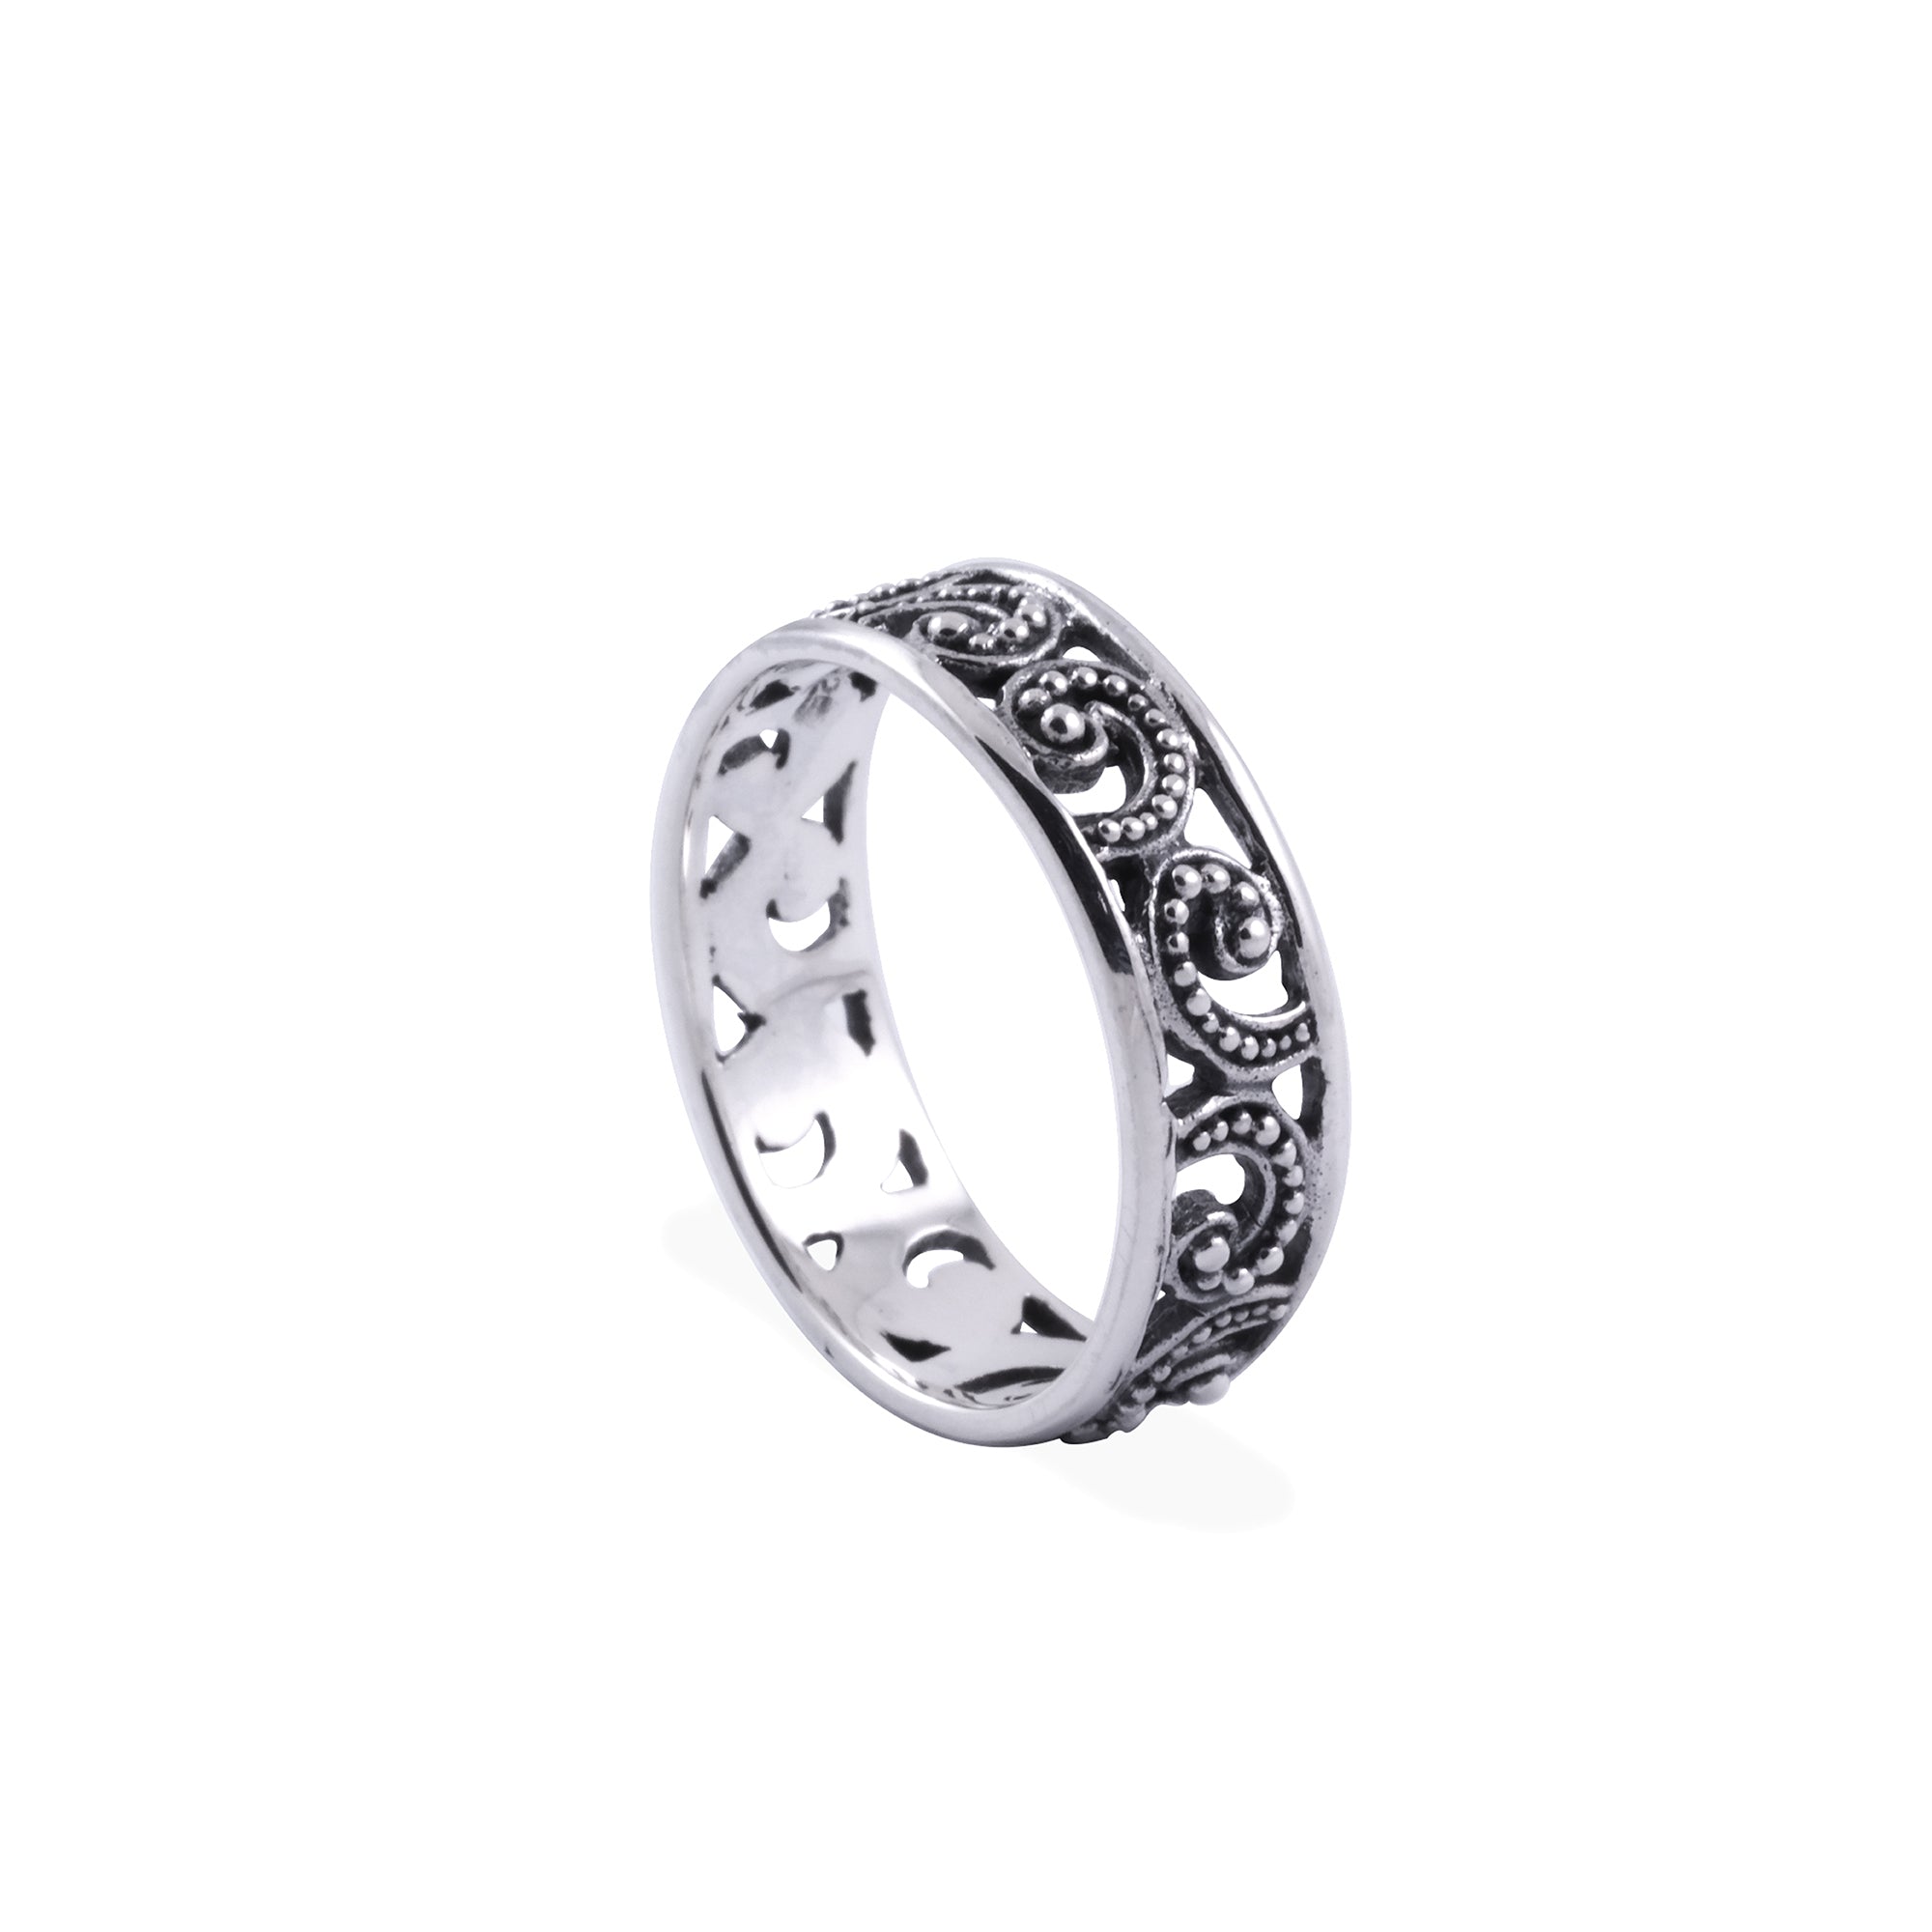 Ombak Segara Band Ring (small) in Sterling Silver